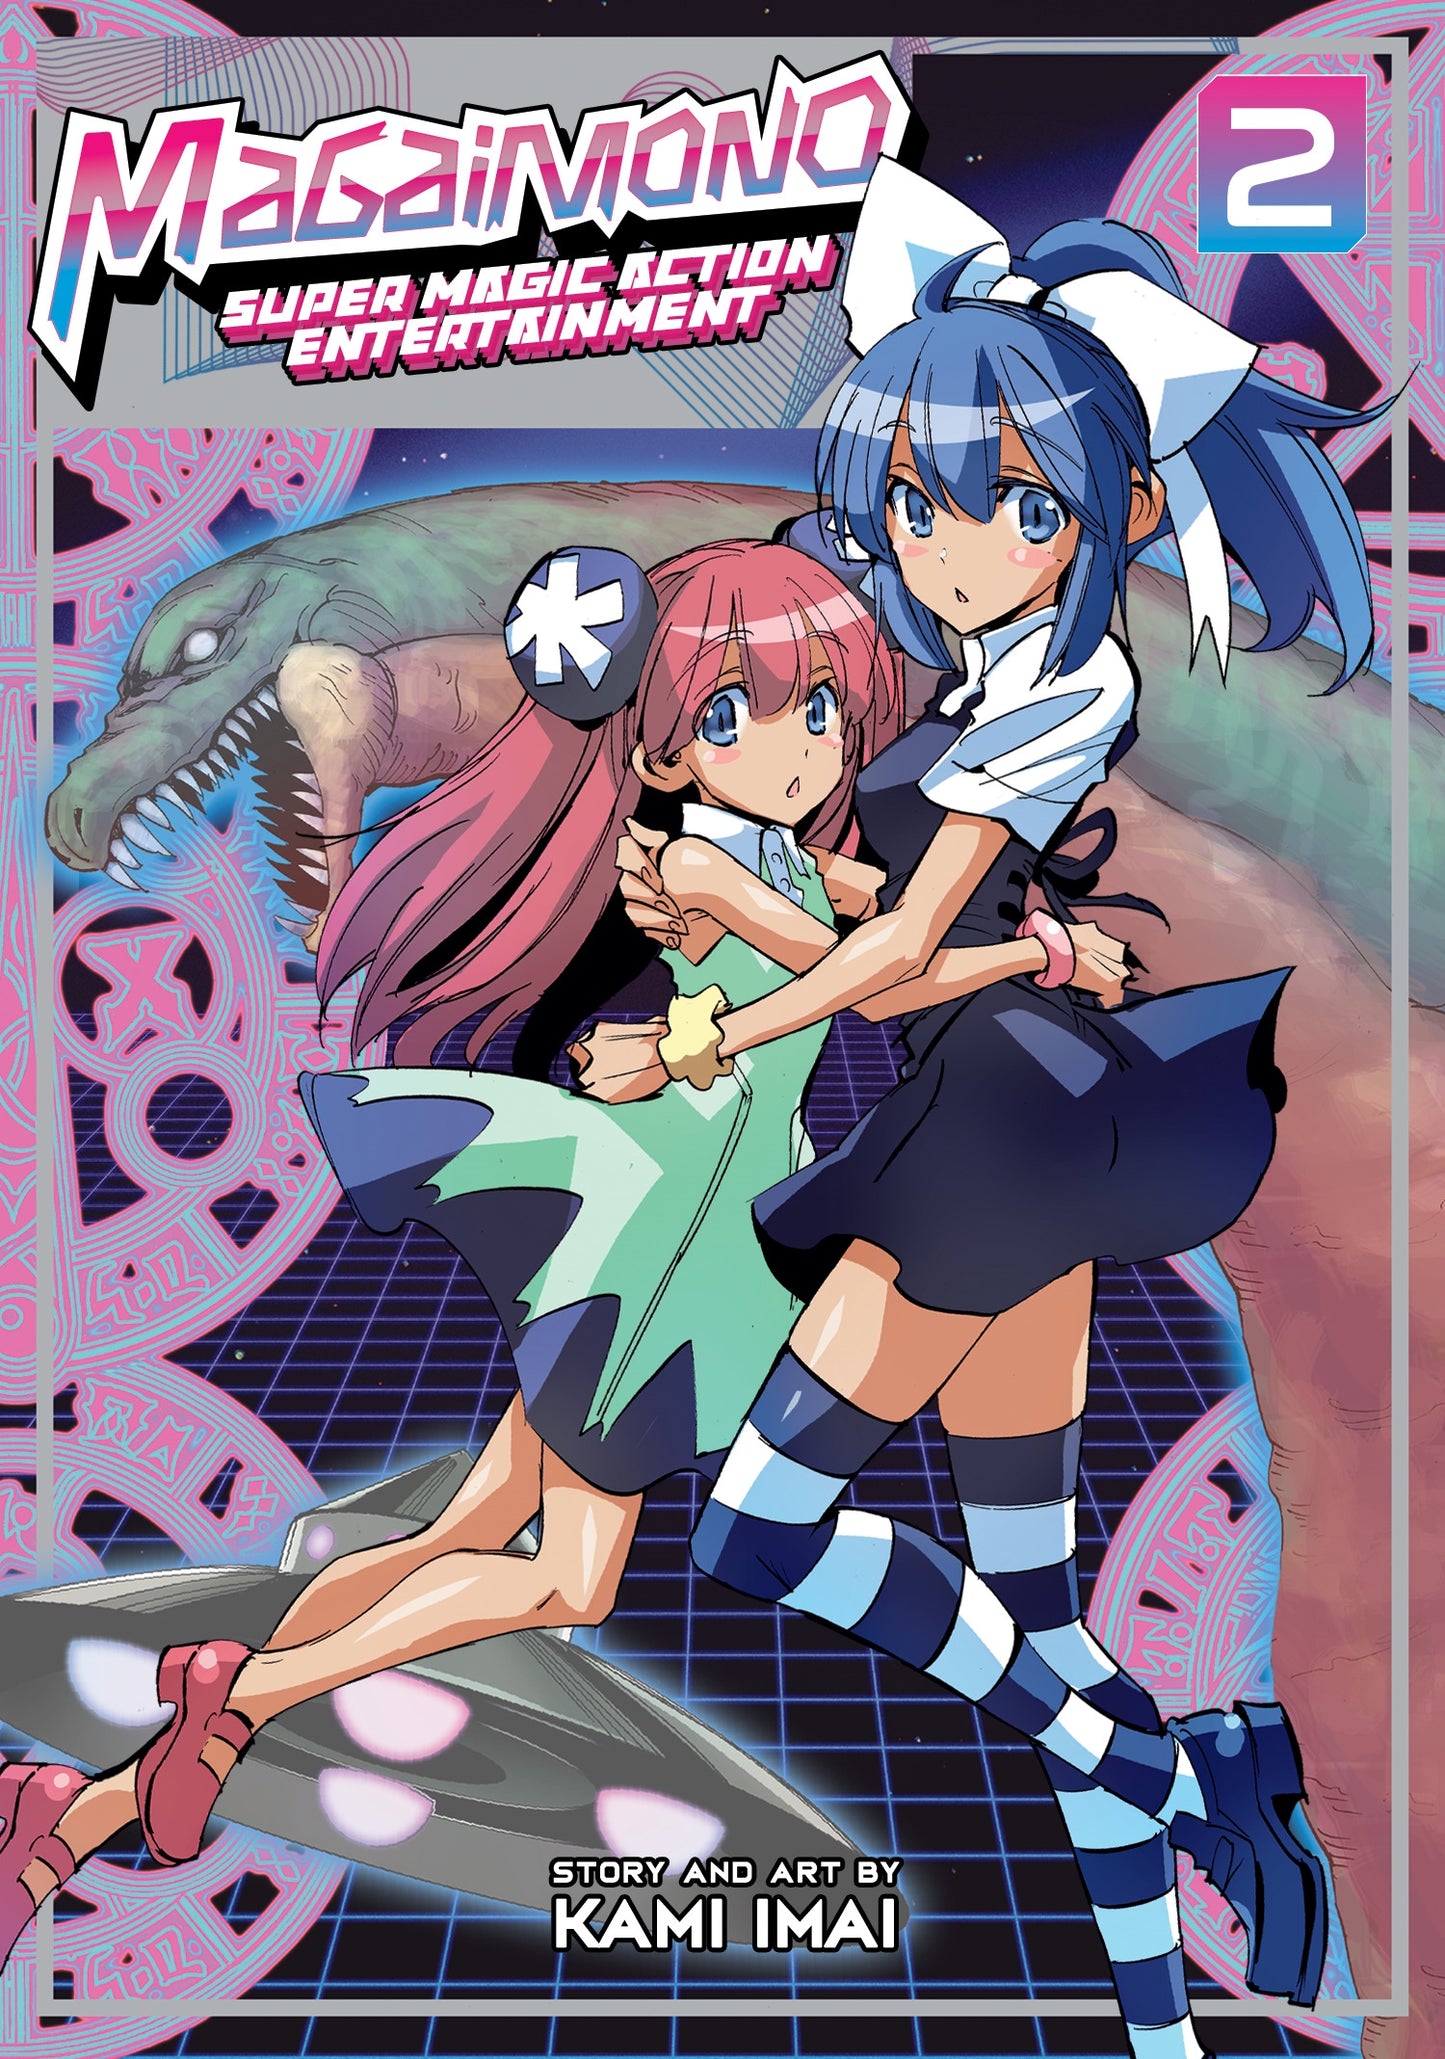 Magaimono : Super Magic Action Entertainment Vol. 2 - Manga Warehouse